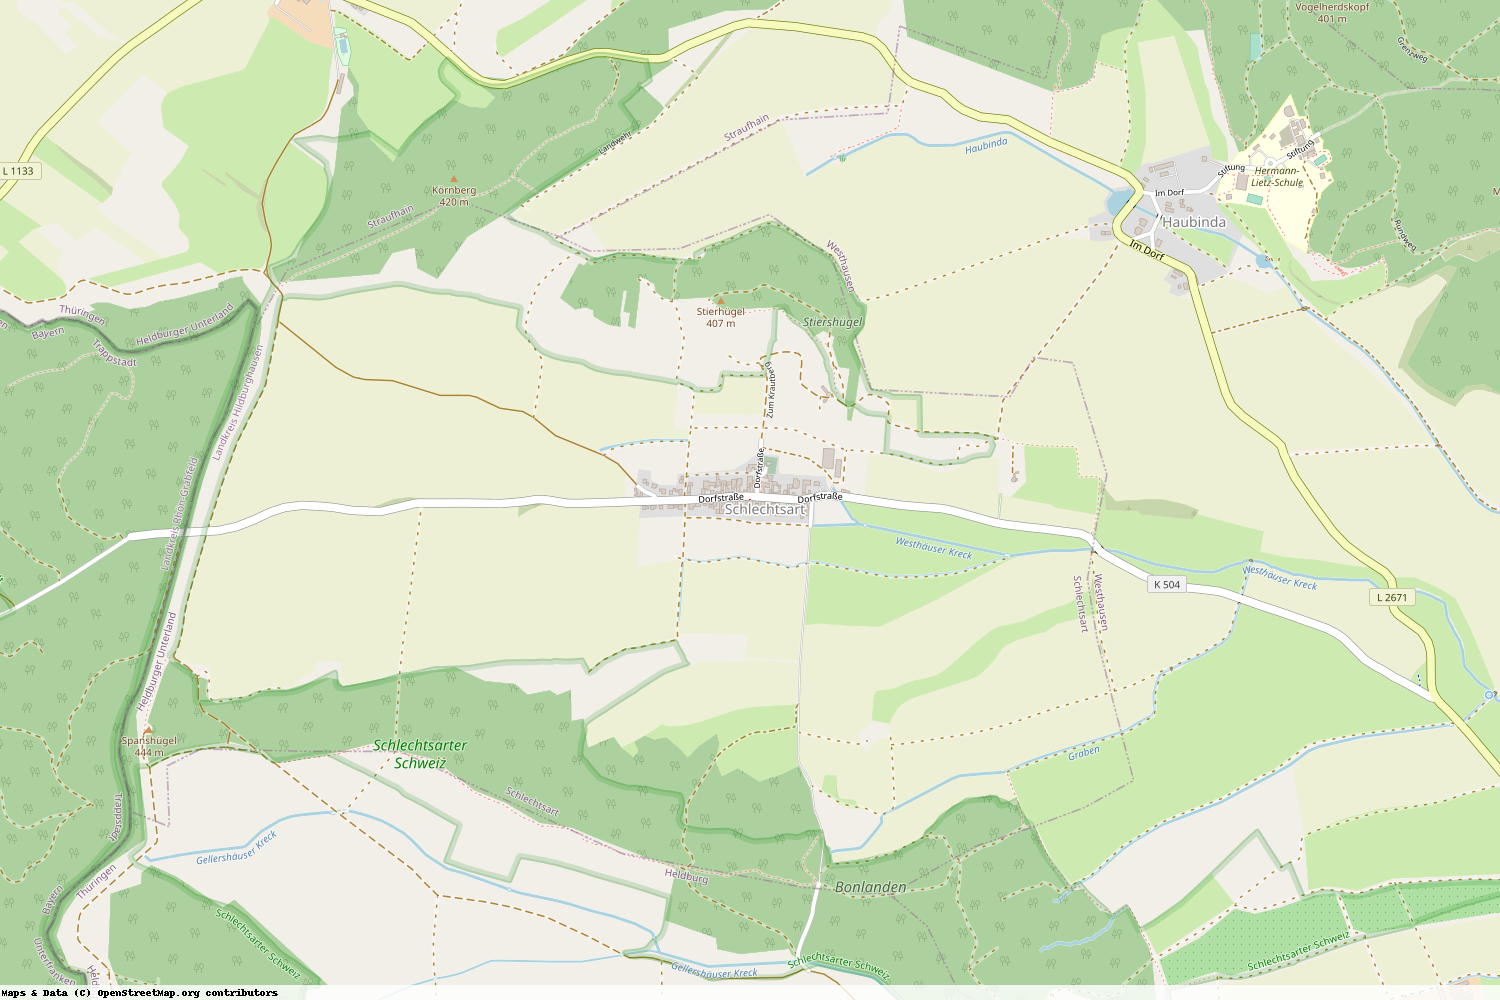 Ist gerade Stromausfall in Thüringen - Hildburghausen - Schlechtsart?